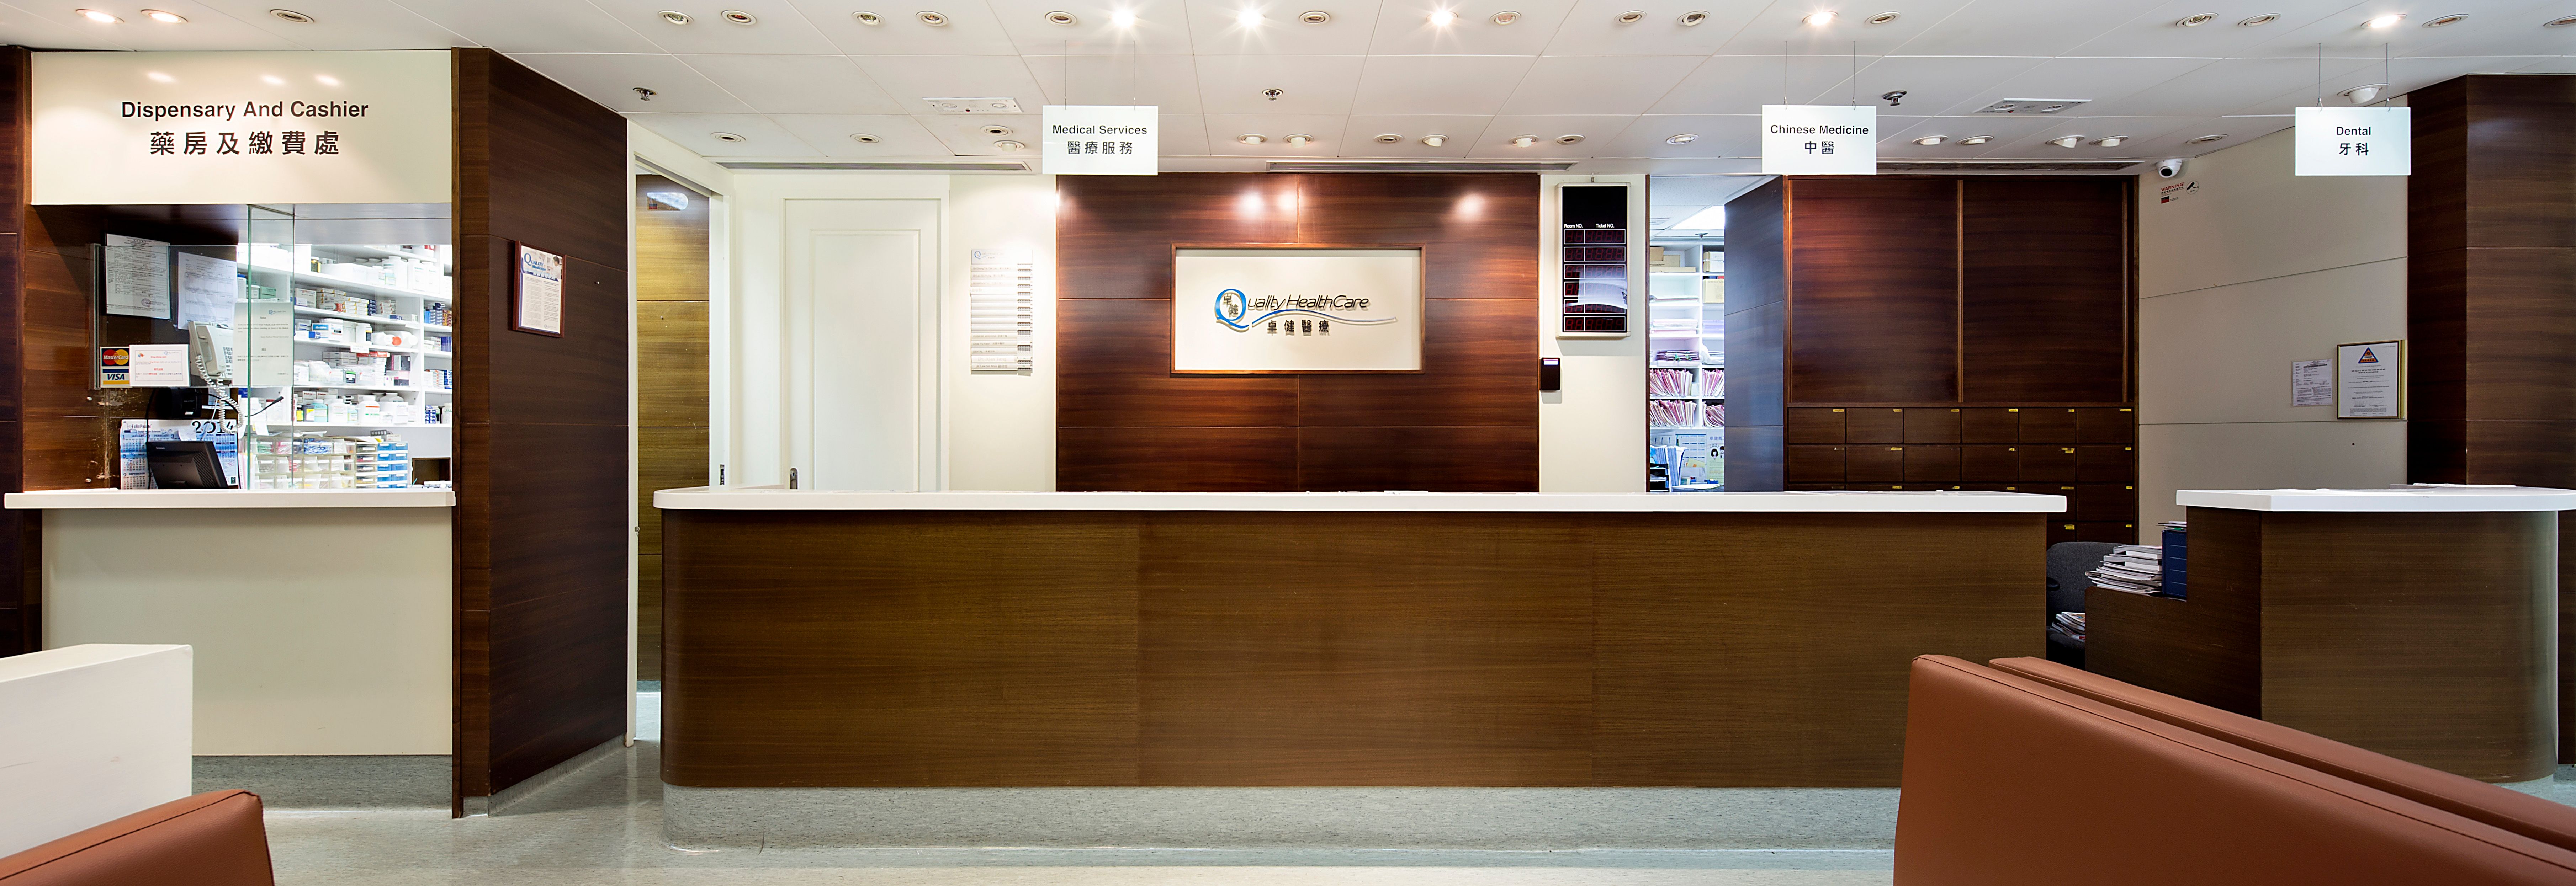 Quality HealthCare Medical Centre reception and dispensary